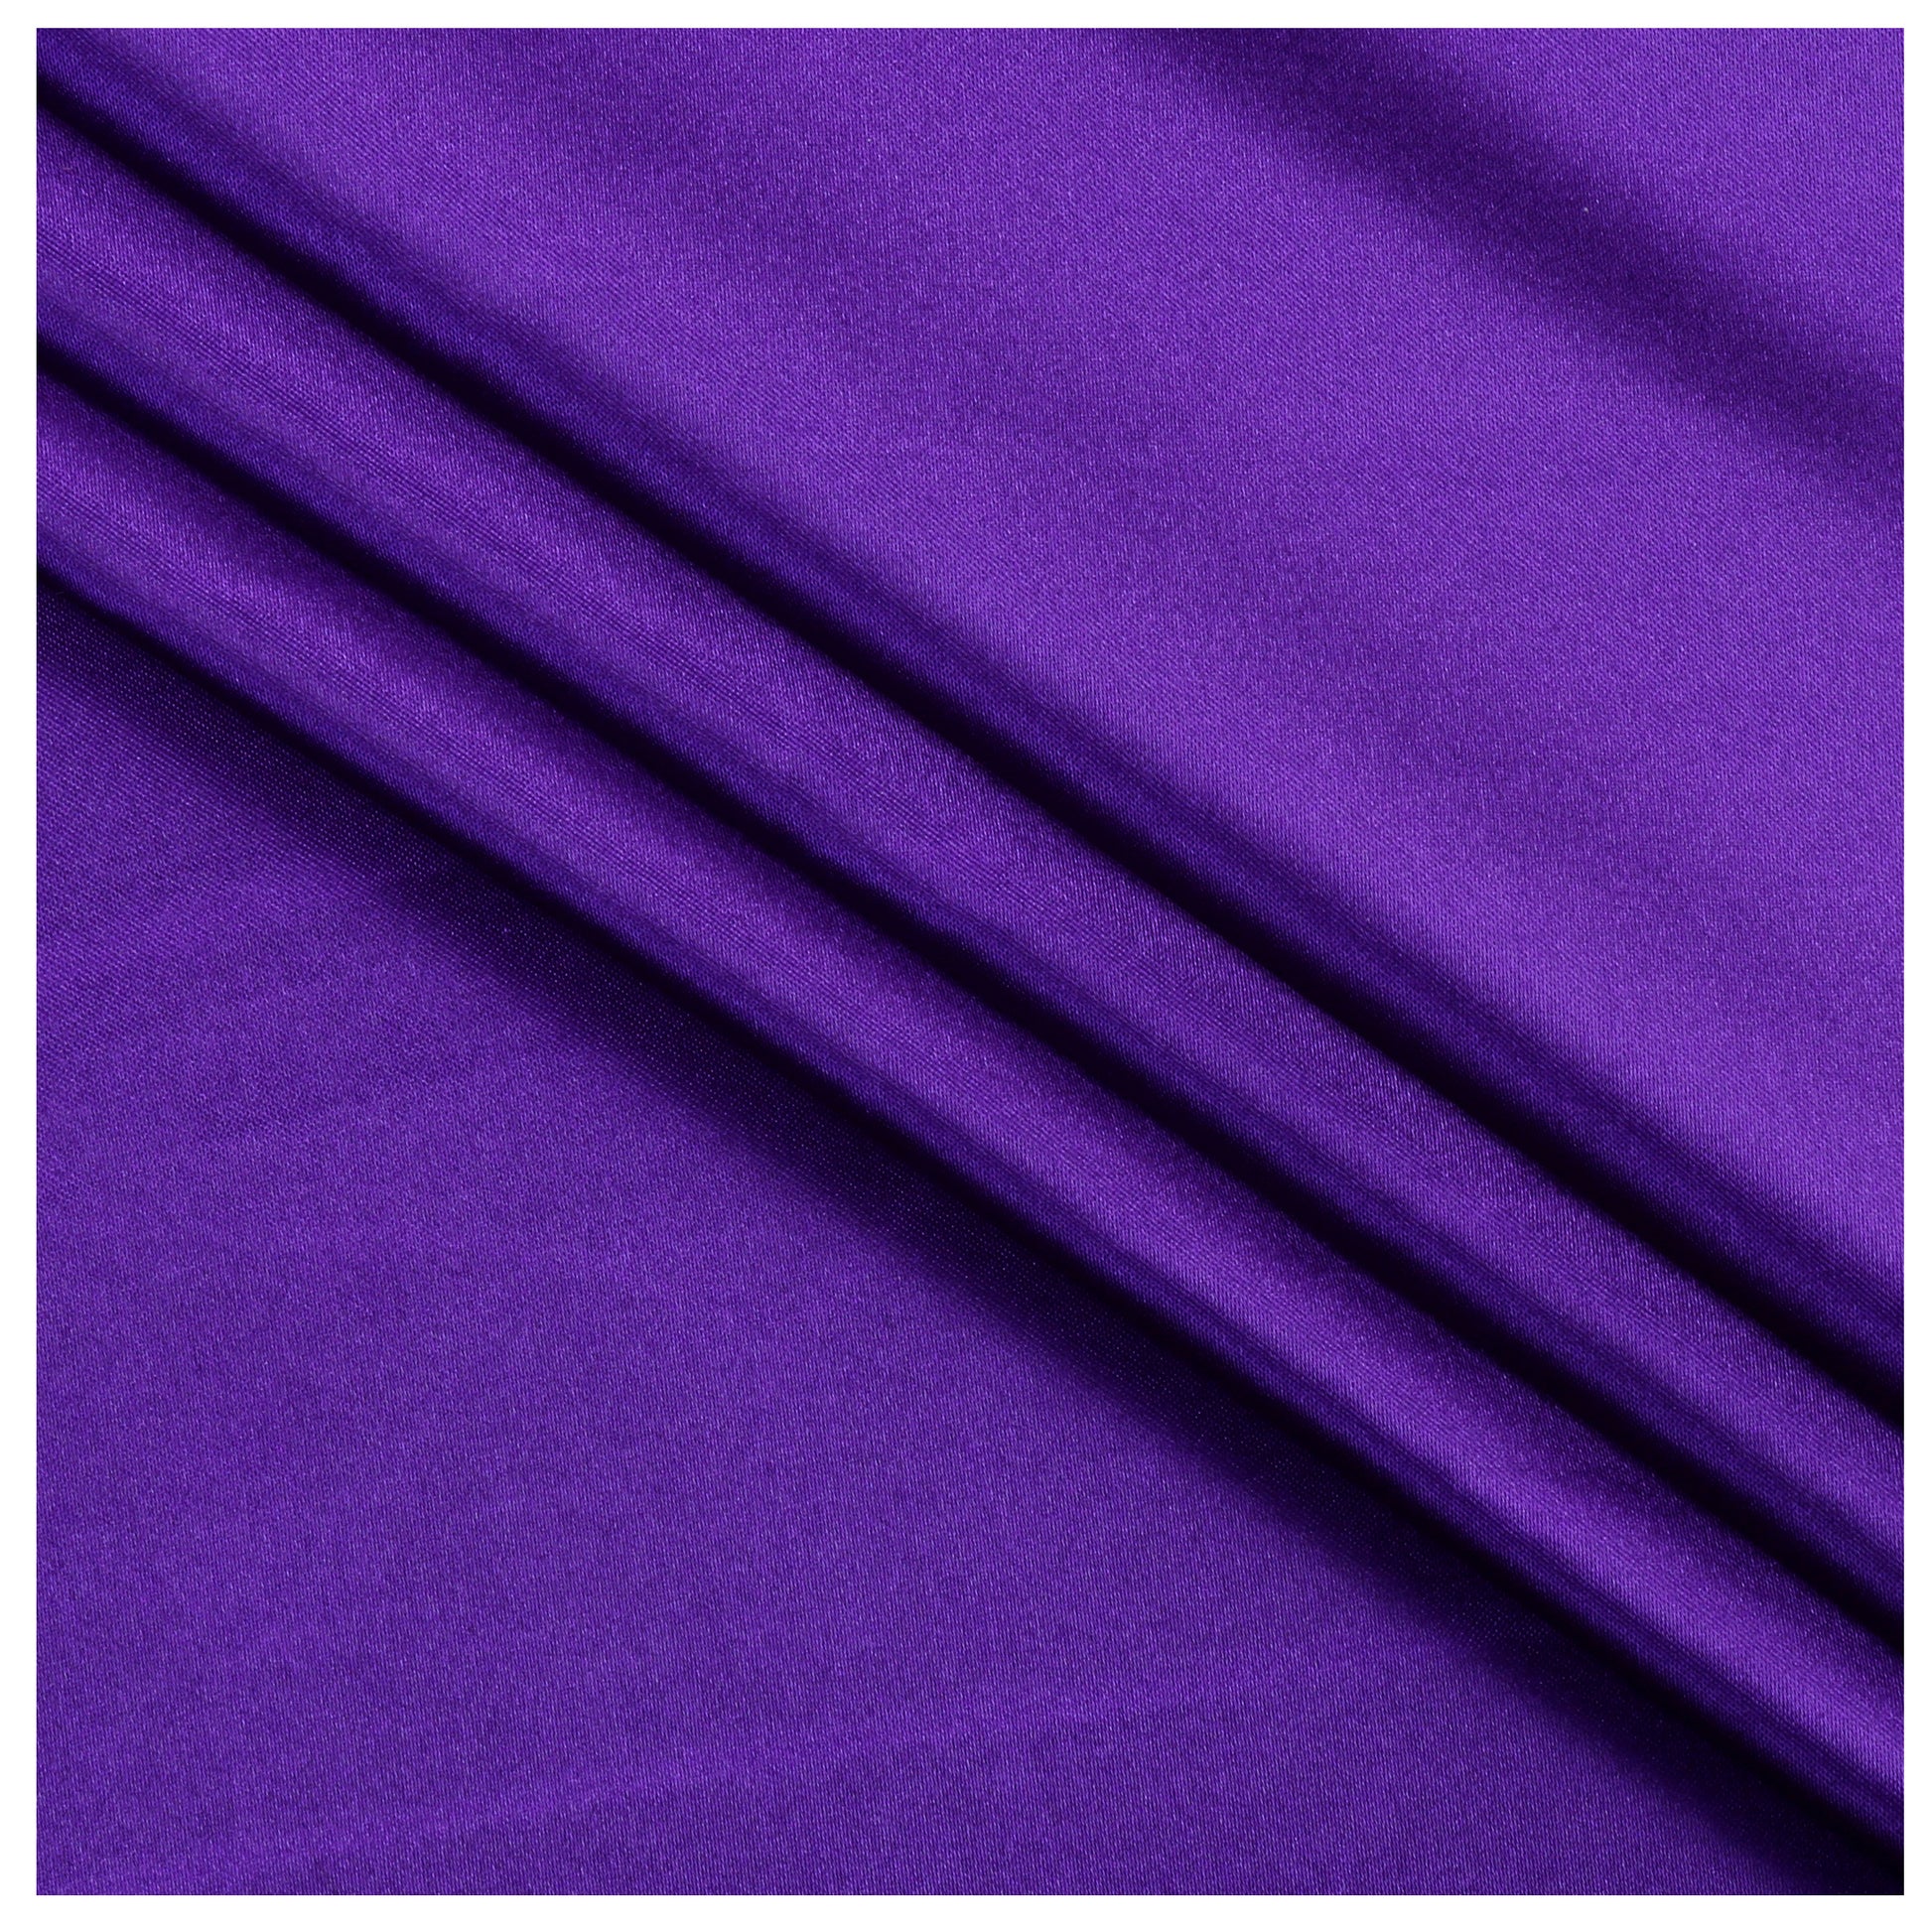 Cadbury Purple,1d4db5a8-c715-4c40-b363-9908a659e035